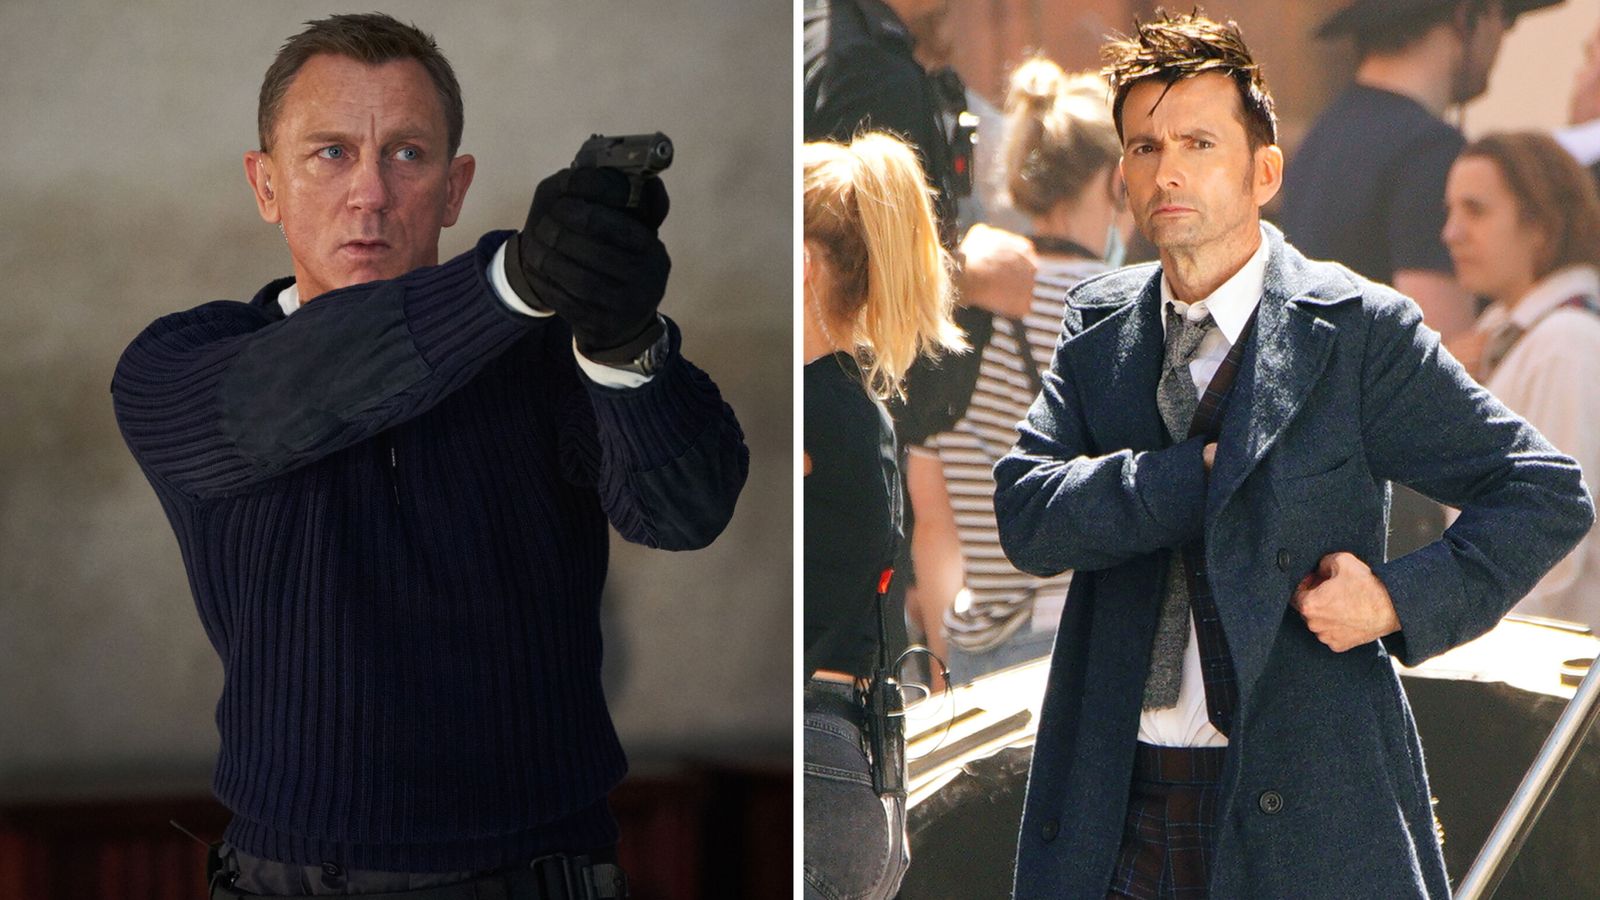 David Tennant was considered alongside Daniel Craig to play James Bond